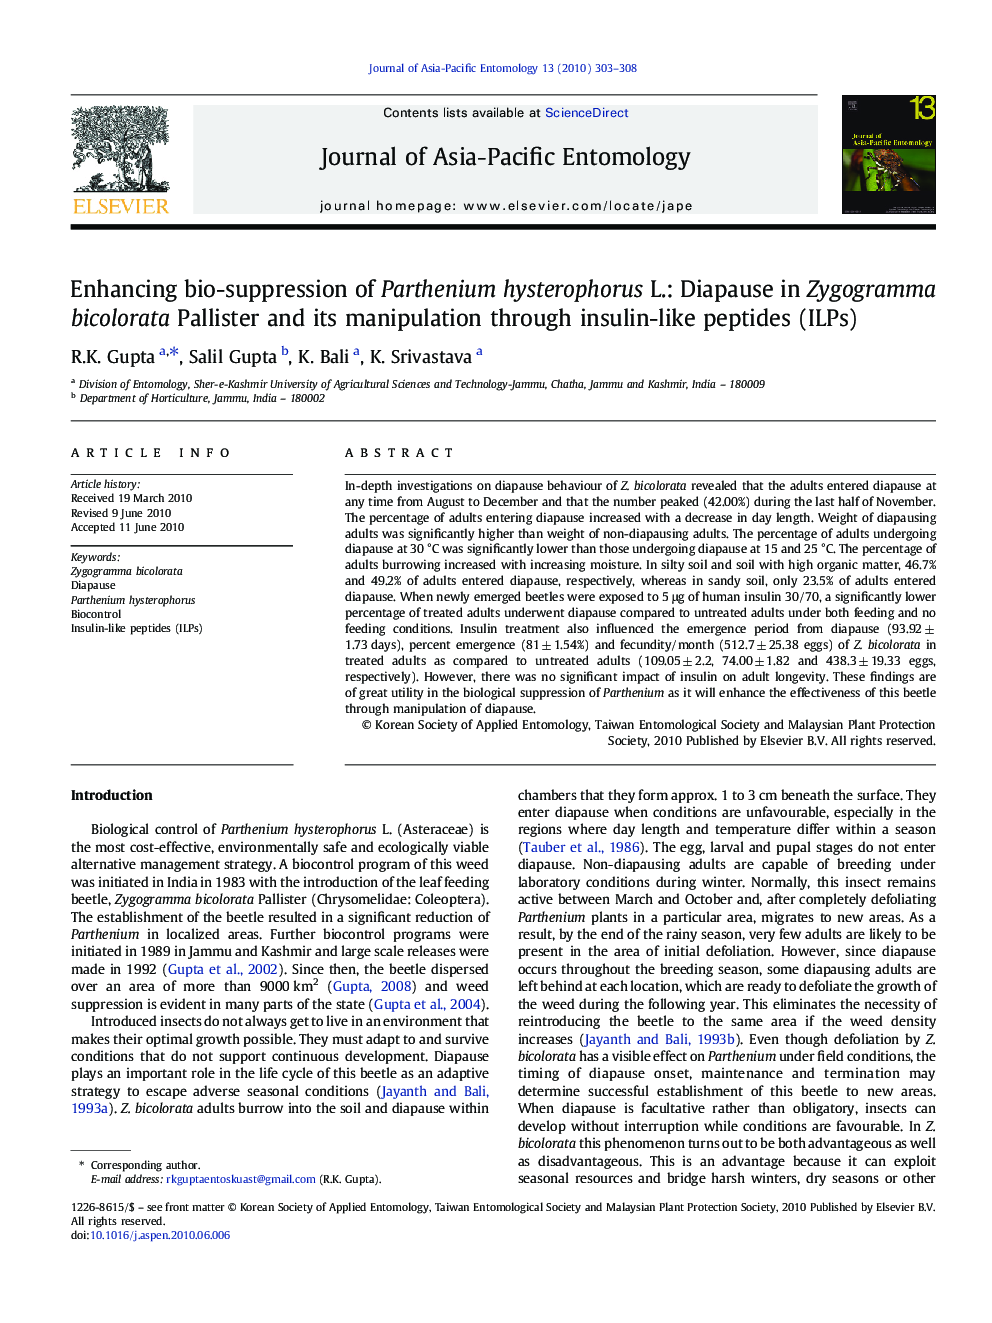 Enhancing bio-suppression of Parthenium hysterophorus L.: Diapause in Zygogramma bicolorata Pallister and its manipulation through insulin-like peptides (ILPs)